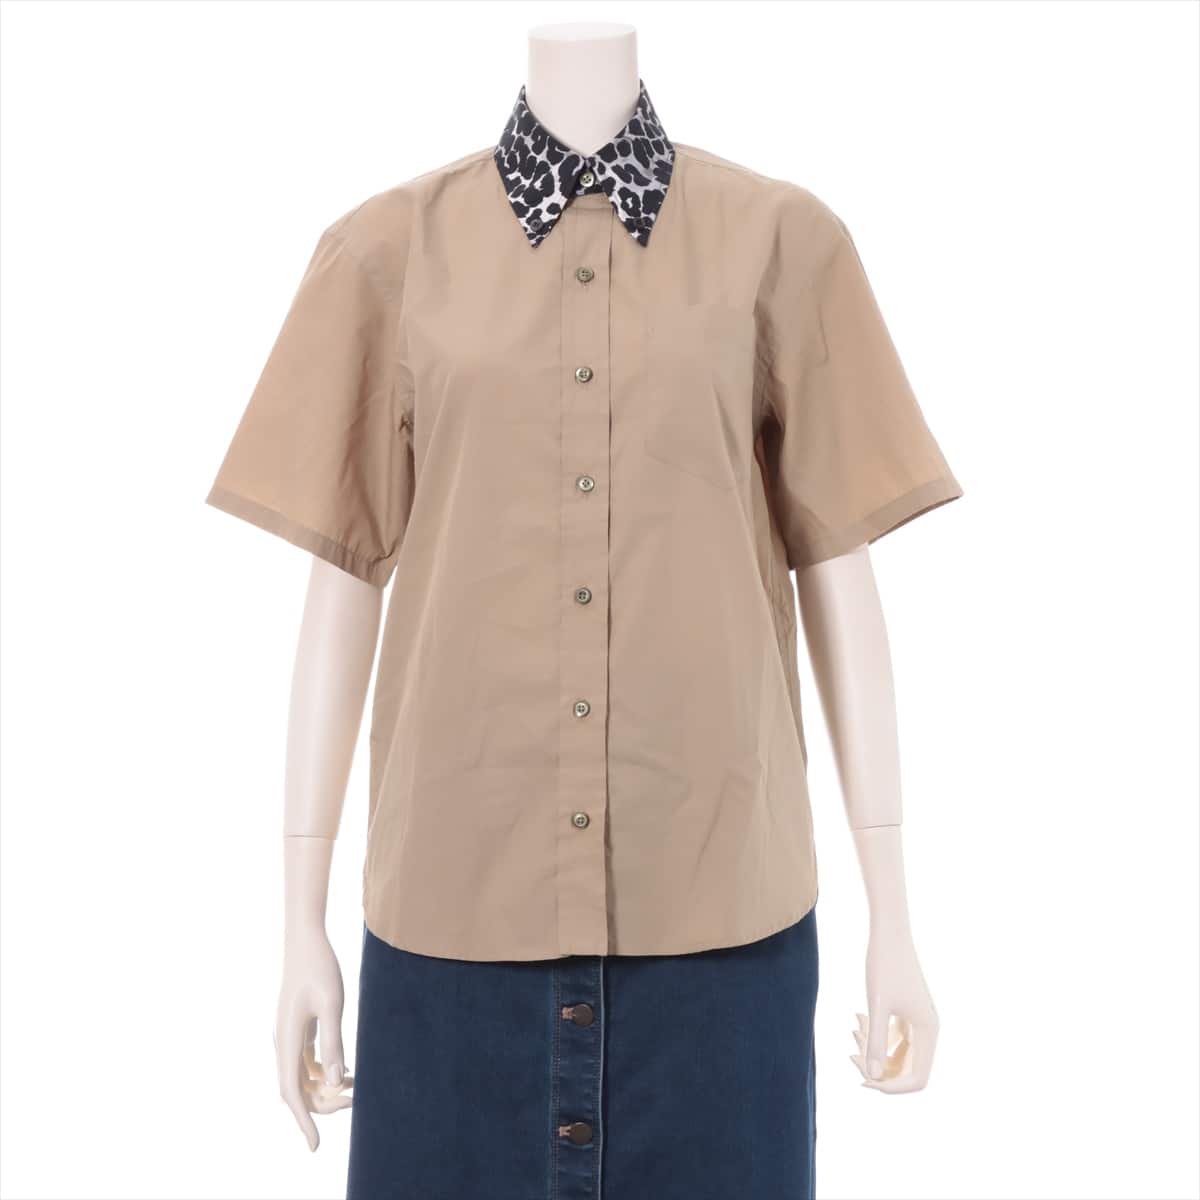 Prada 18 years Cotton Shirt 36 Ladies' Beige  Color switching 3 way shirt